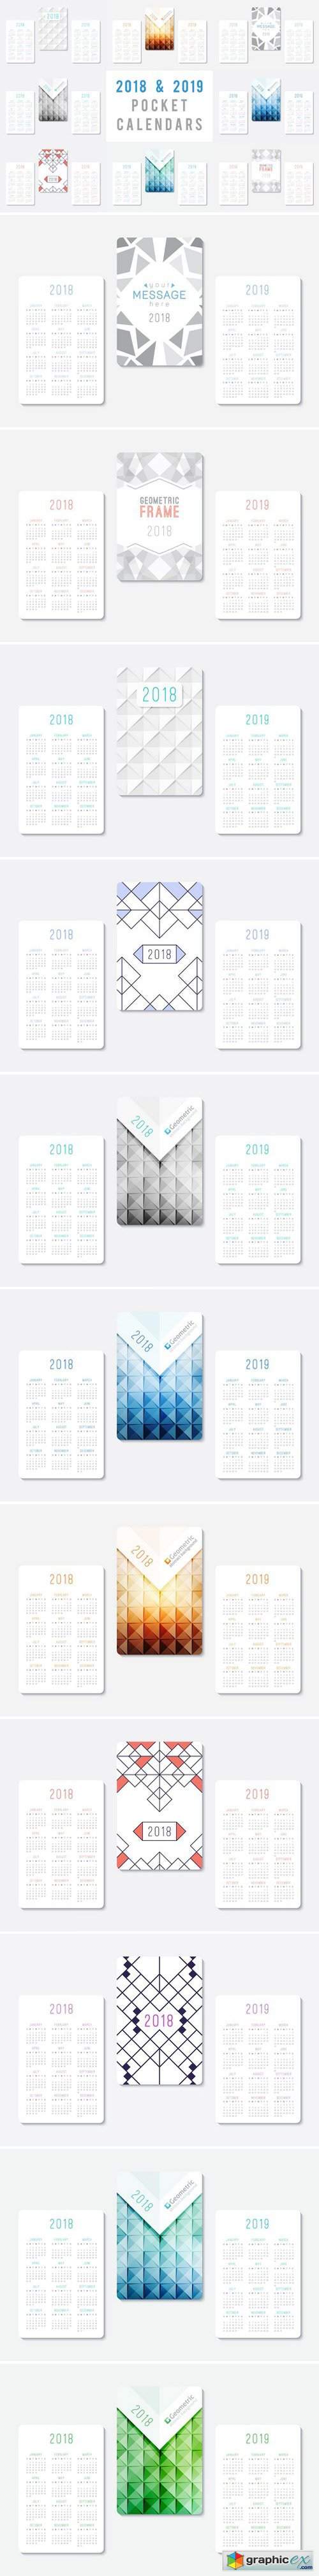 11 calendars templates